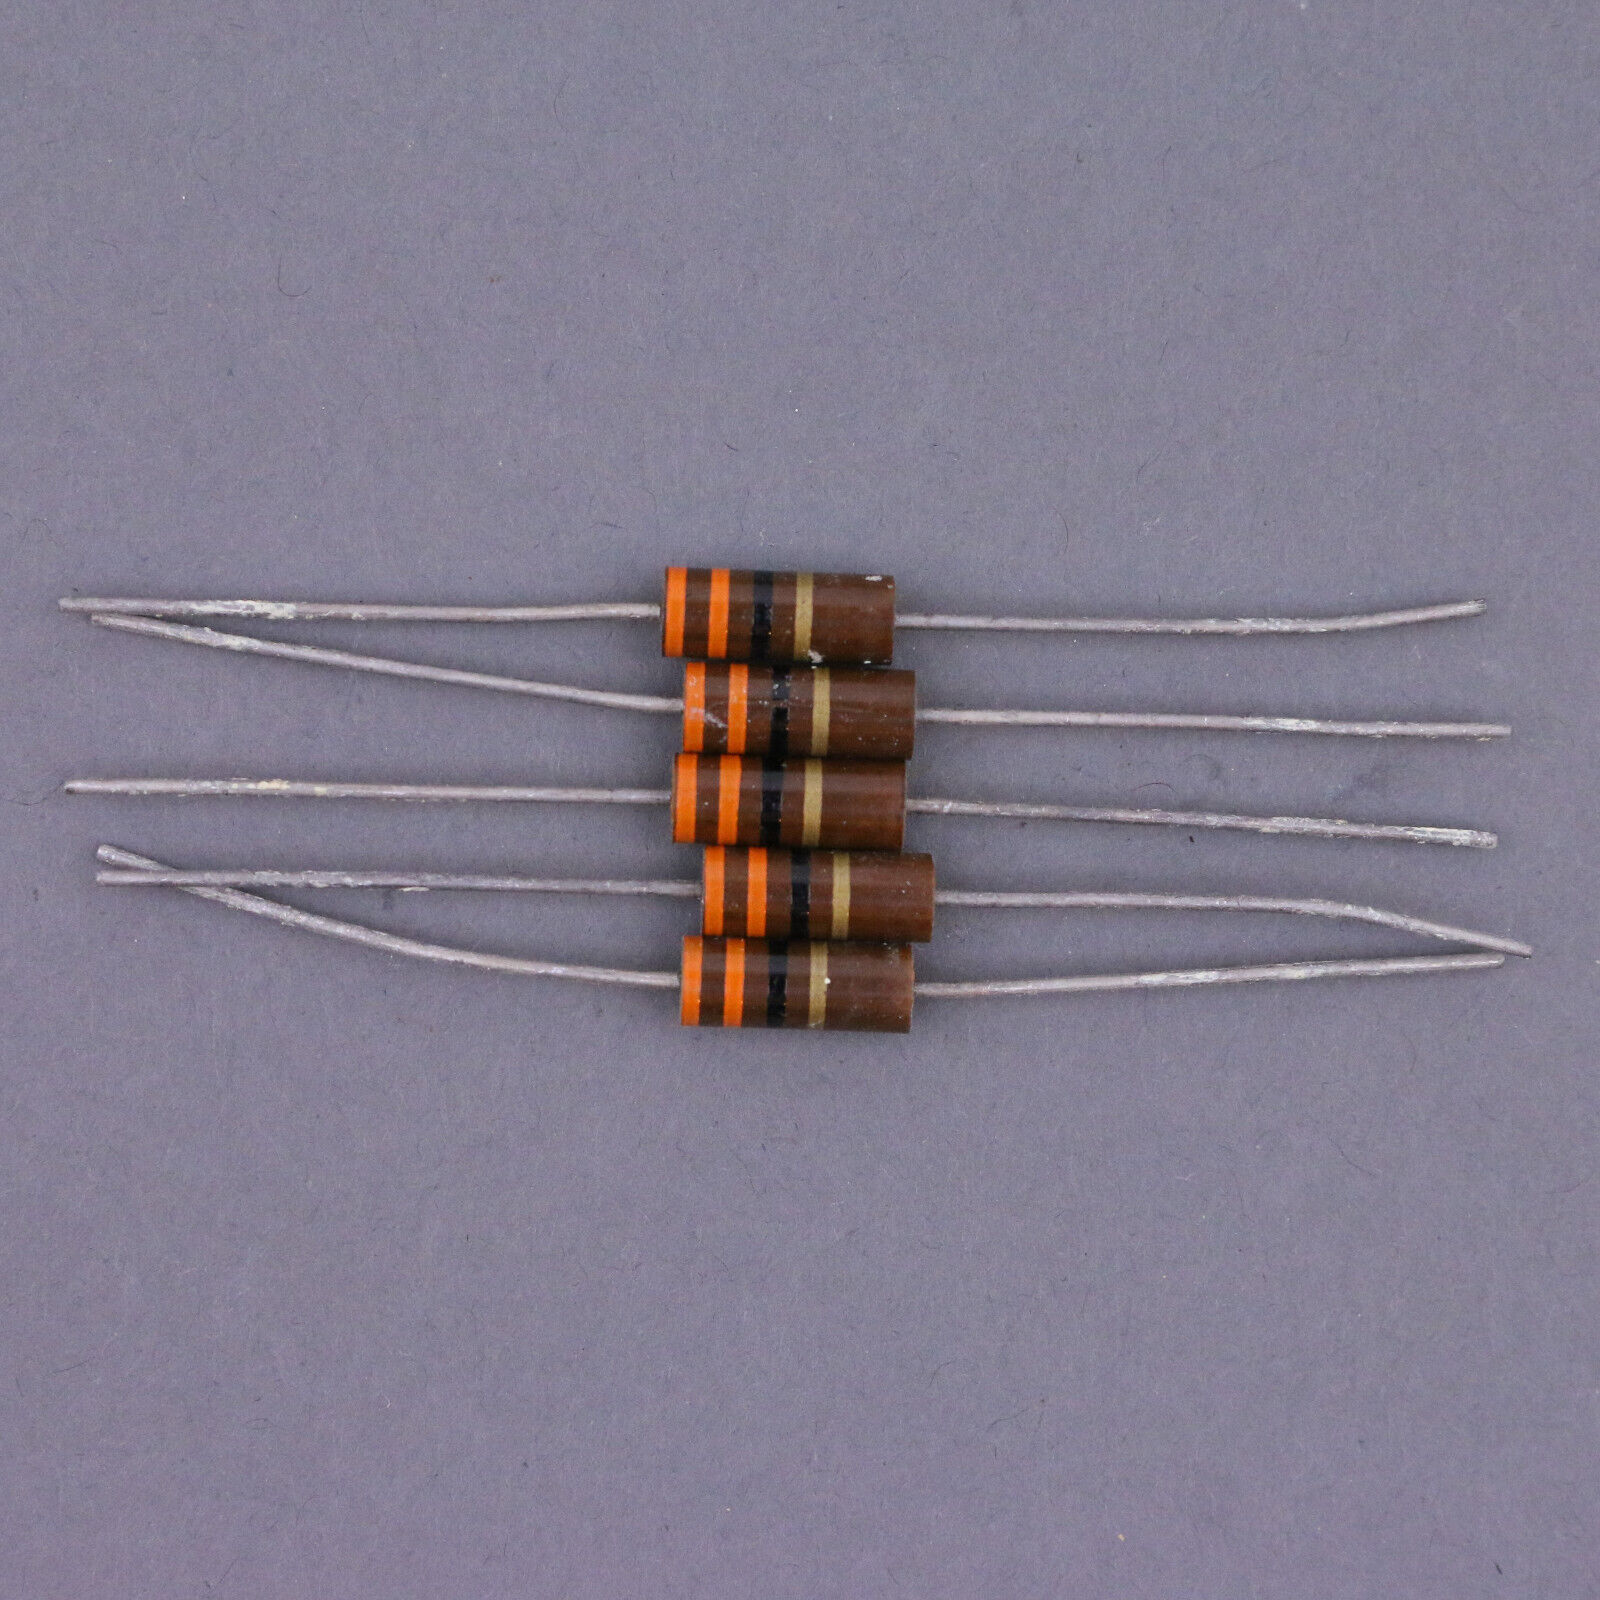 Lot of 5 Vintage Allen Bradley 33 Ohm Resistor 1W Watt 5% NOS Carbon Comp TESTED